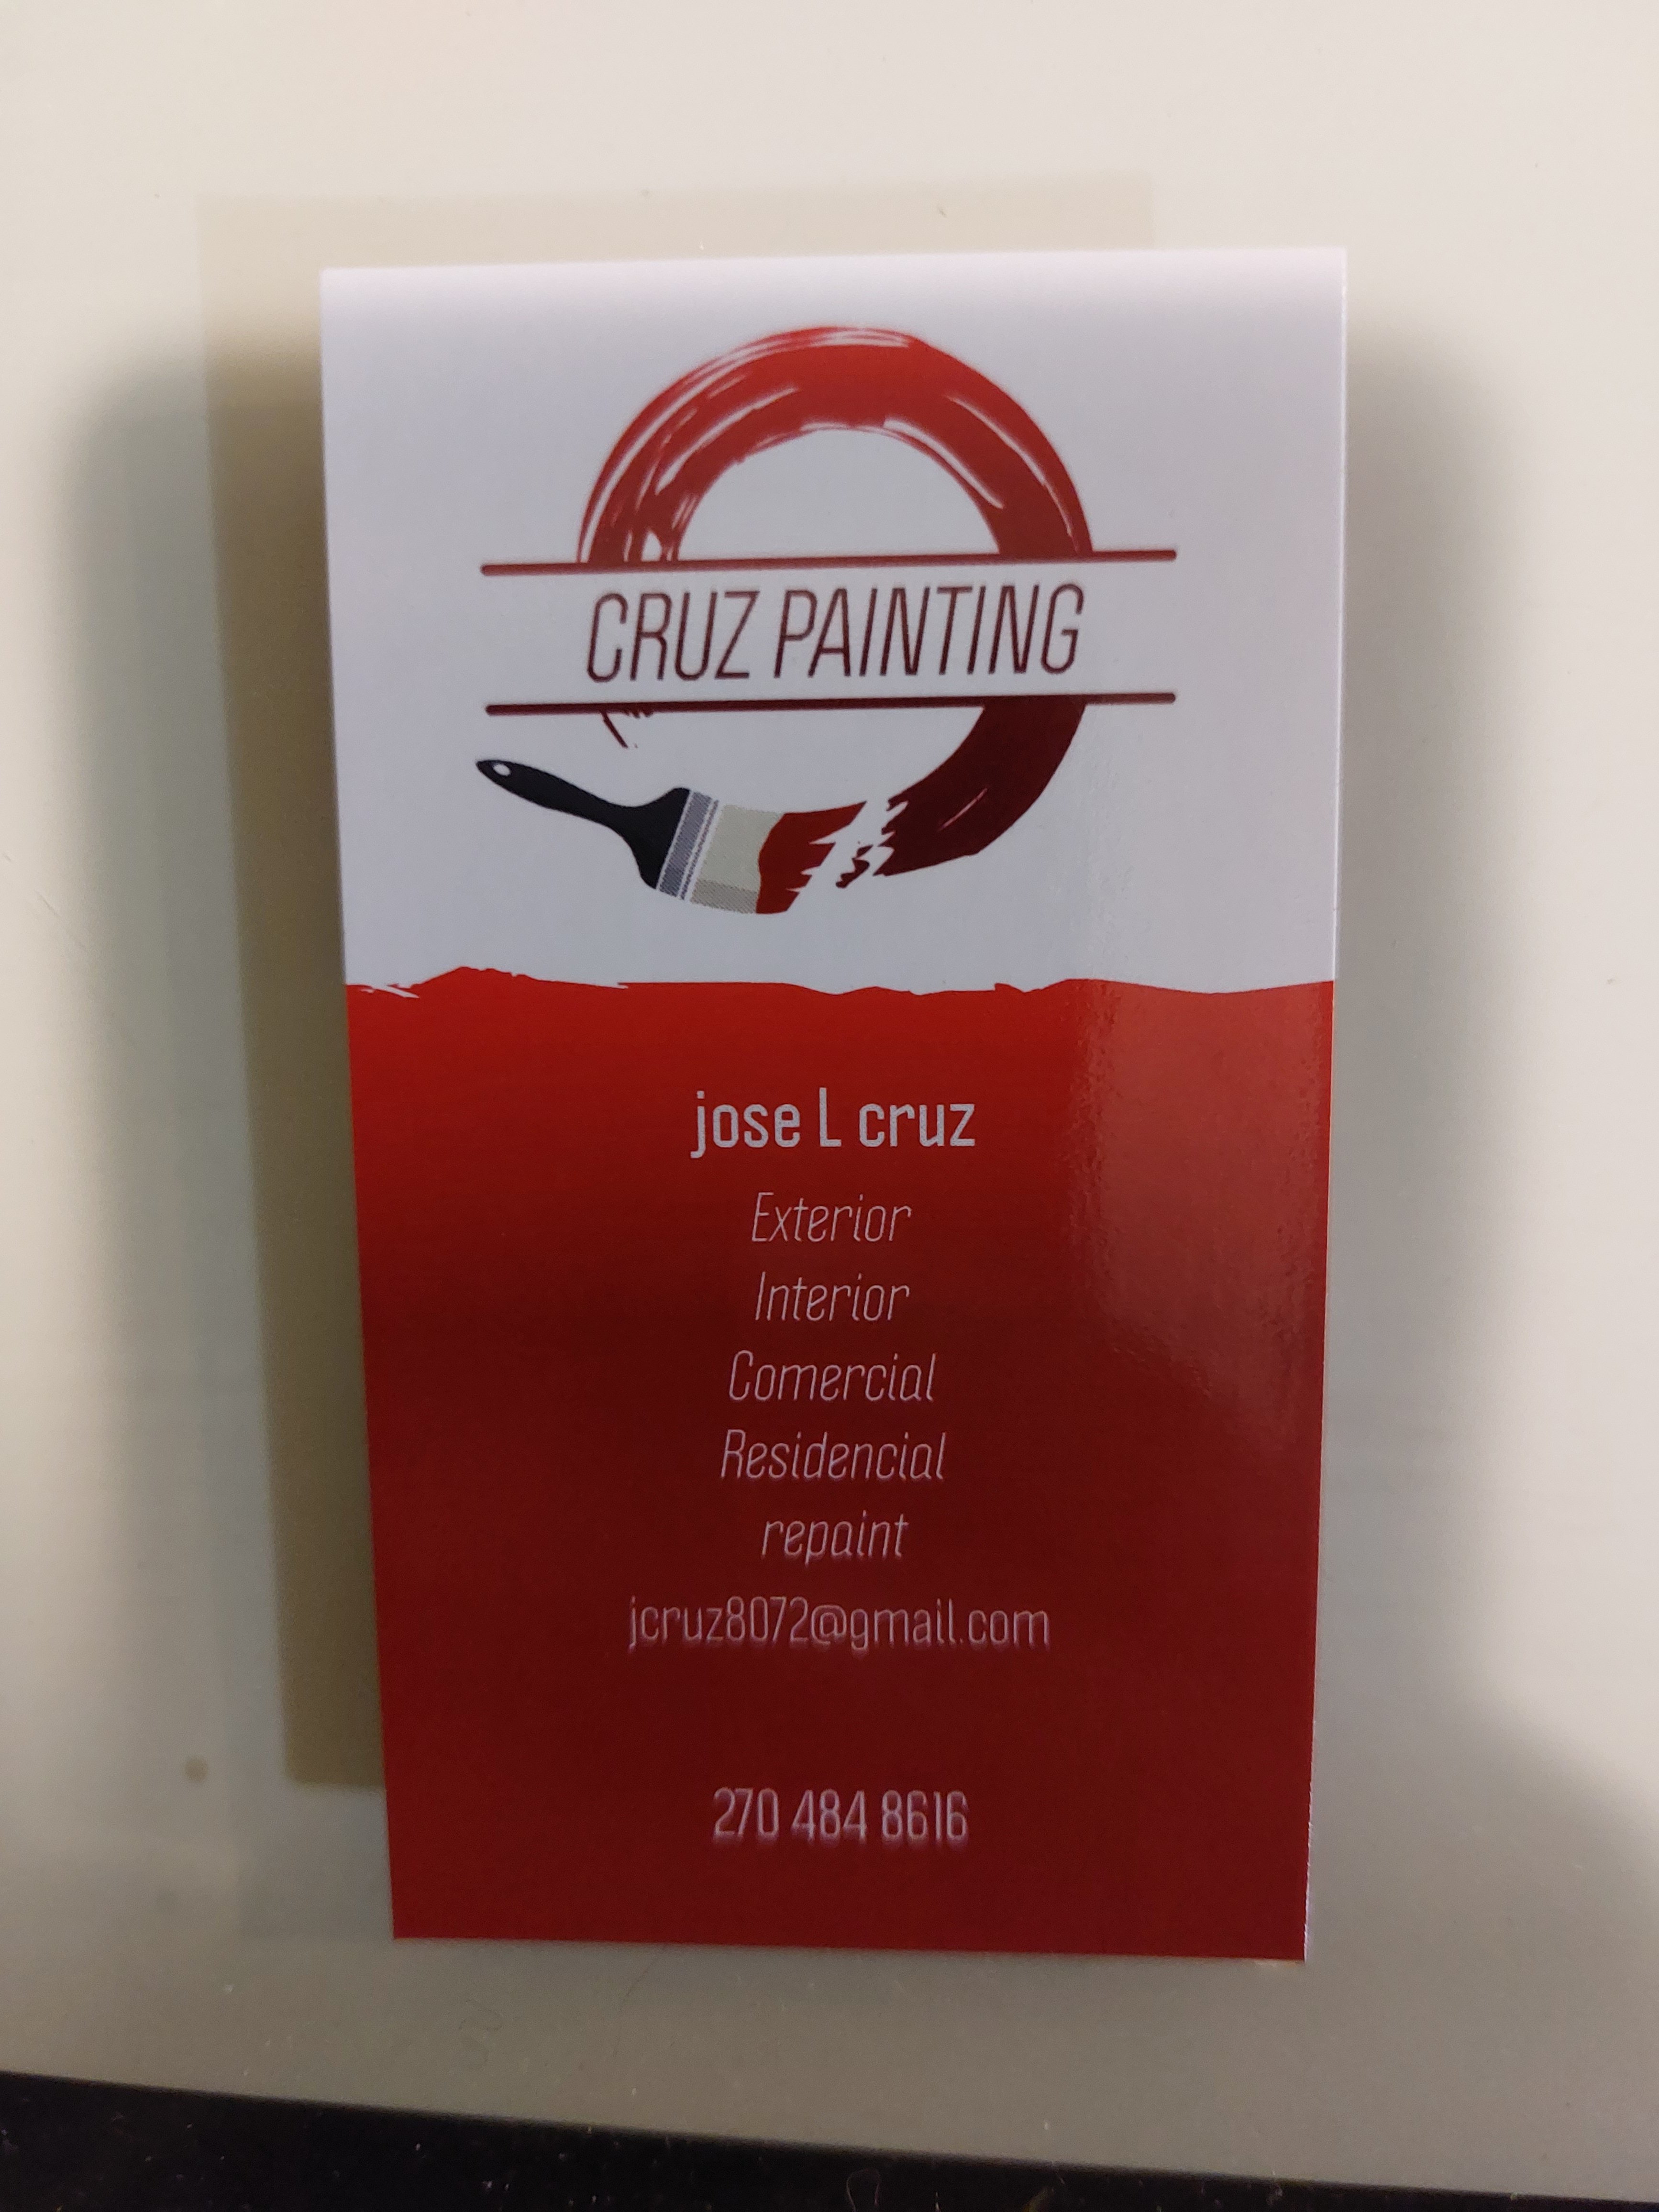 Cruz Painting Logo